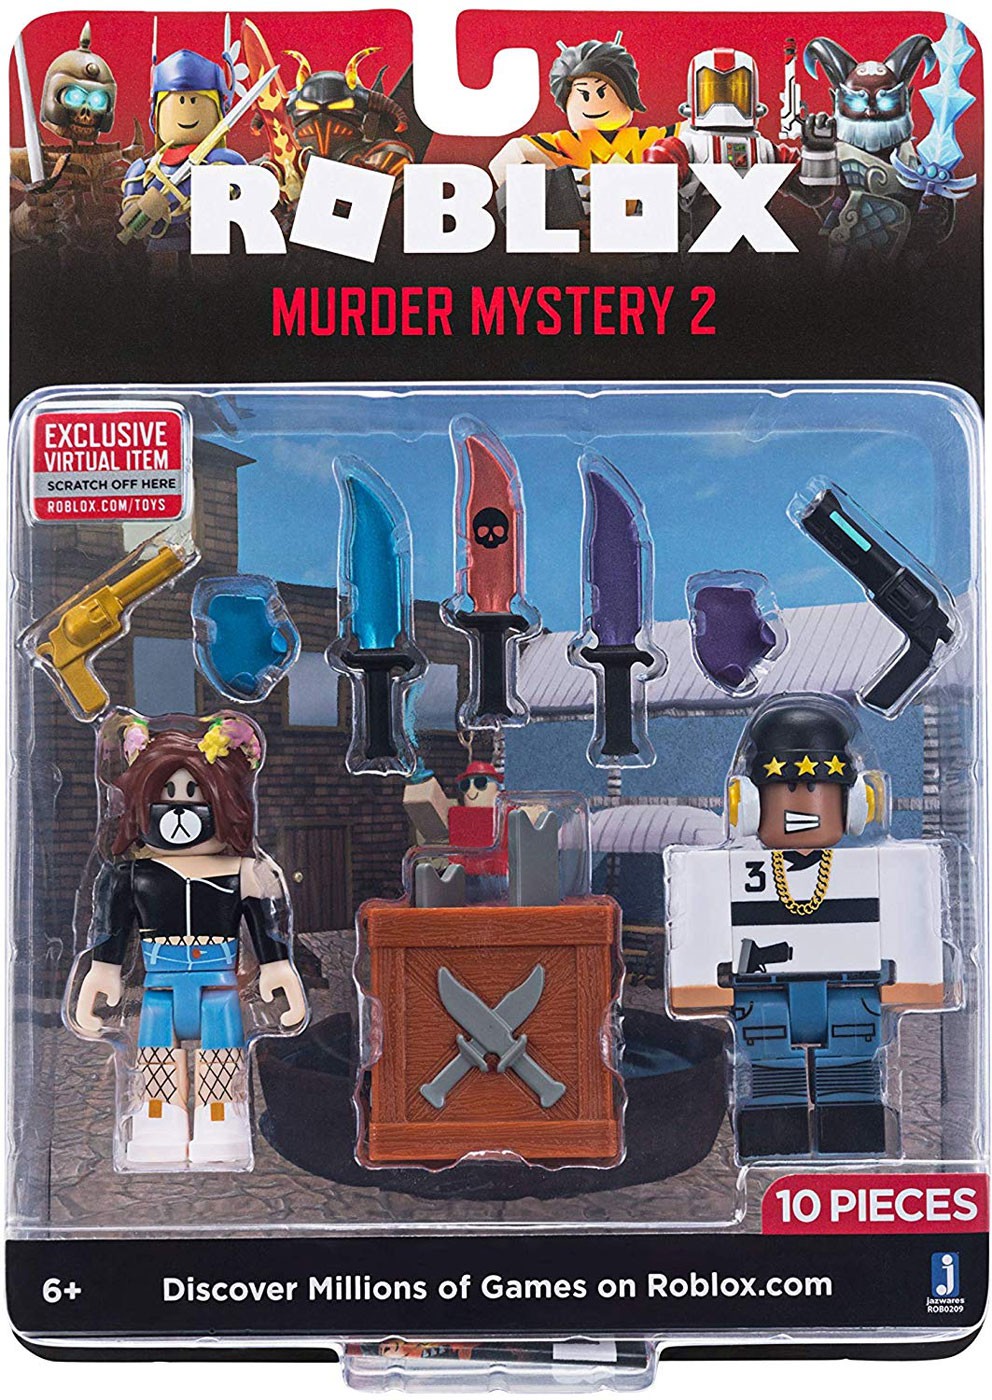 Roblox Murder Mystery 2 Action Figure 2 Pack 191726004141 Ebay - roblox action figure collections game action figures ebay